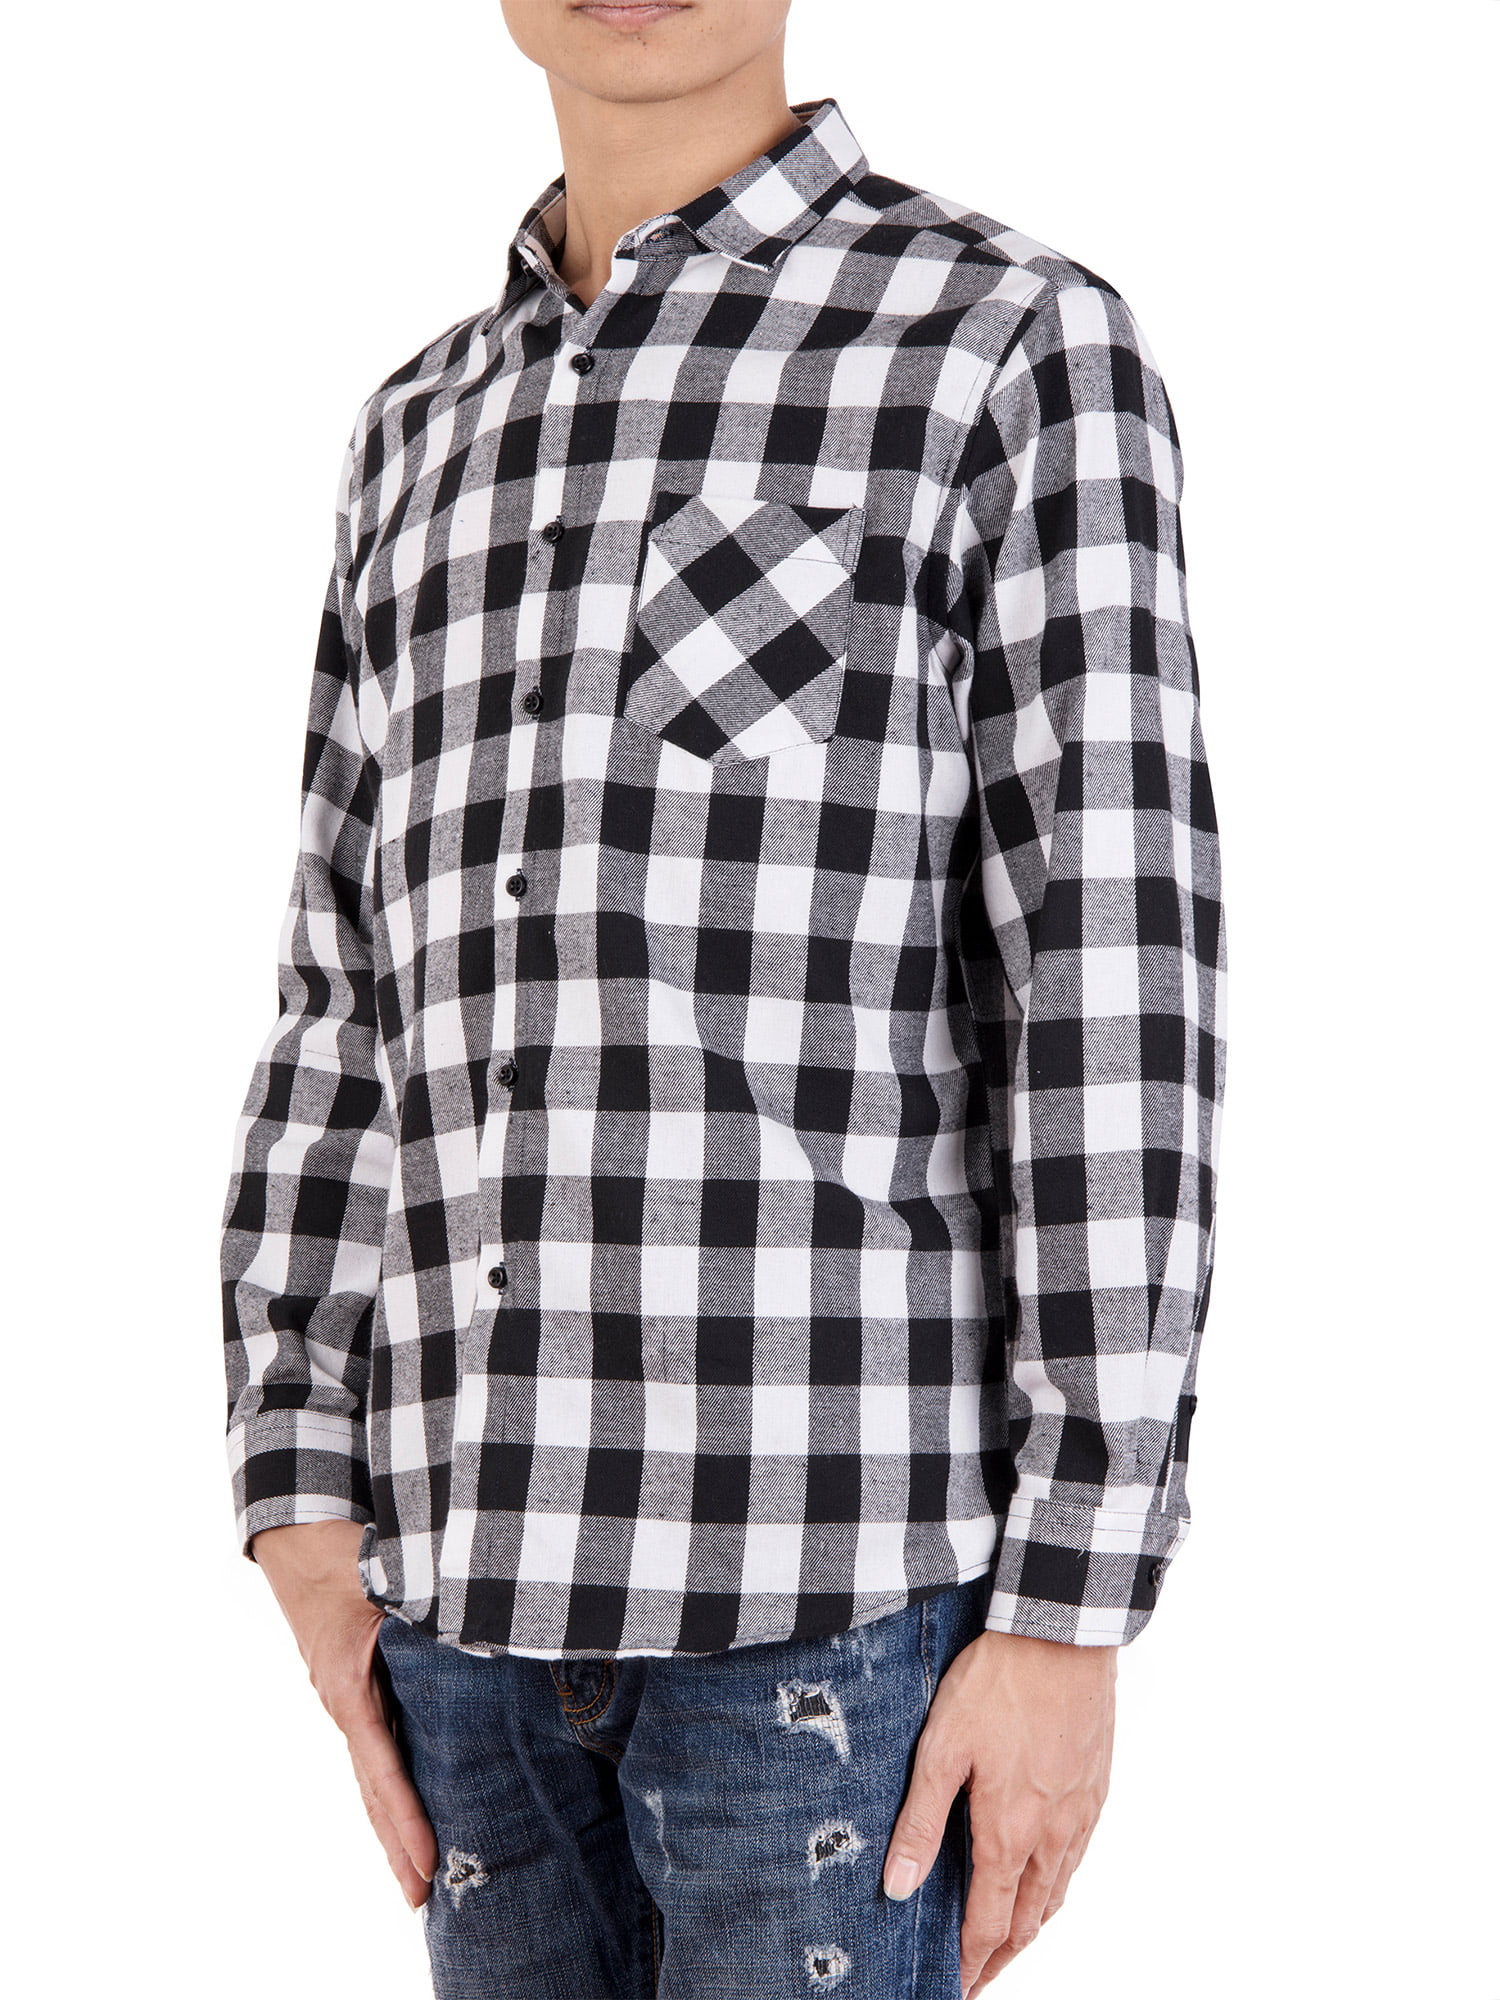 Men's Long Sleeve Plaid Shirts Casual Flannel Shirt Button Down Slim ...